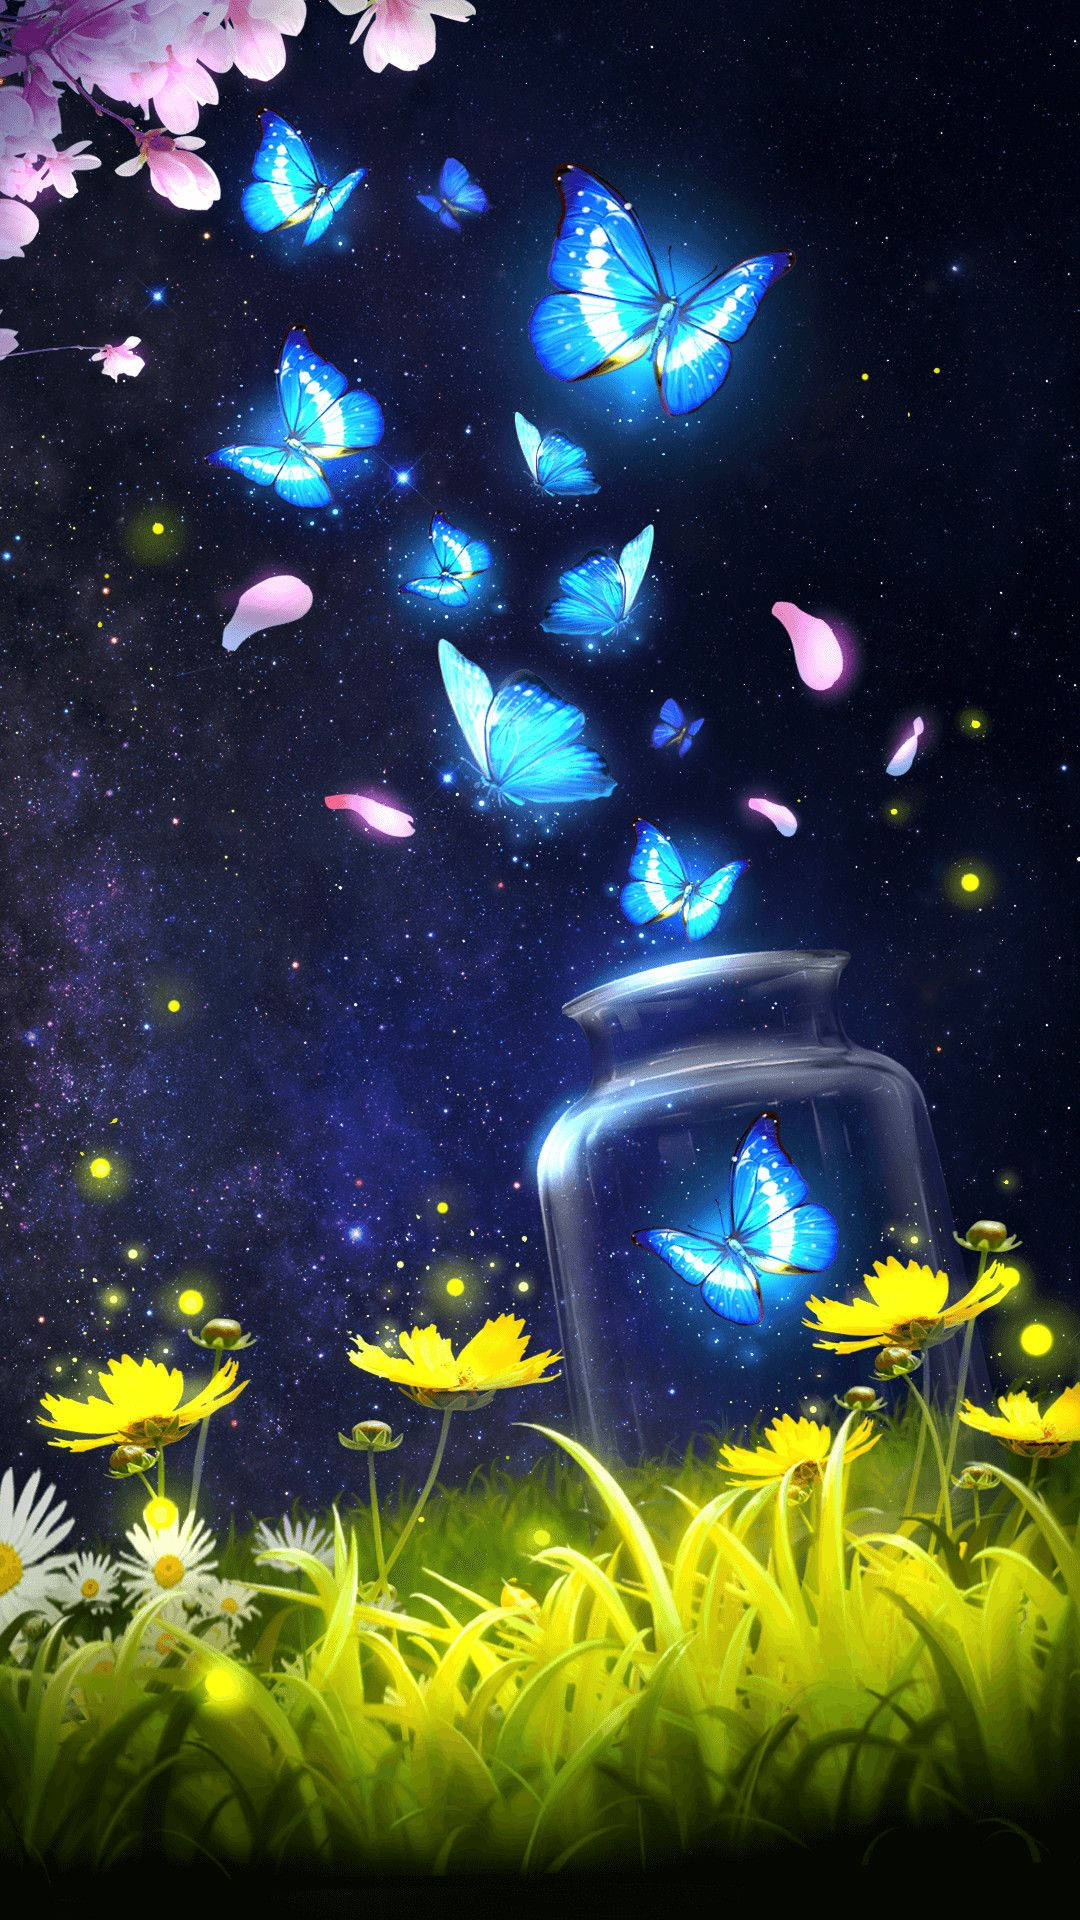 Beautiful Butterflies Animated in Mid-Flight Wallpaper